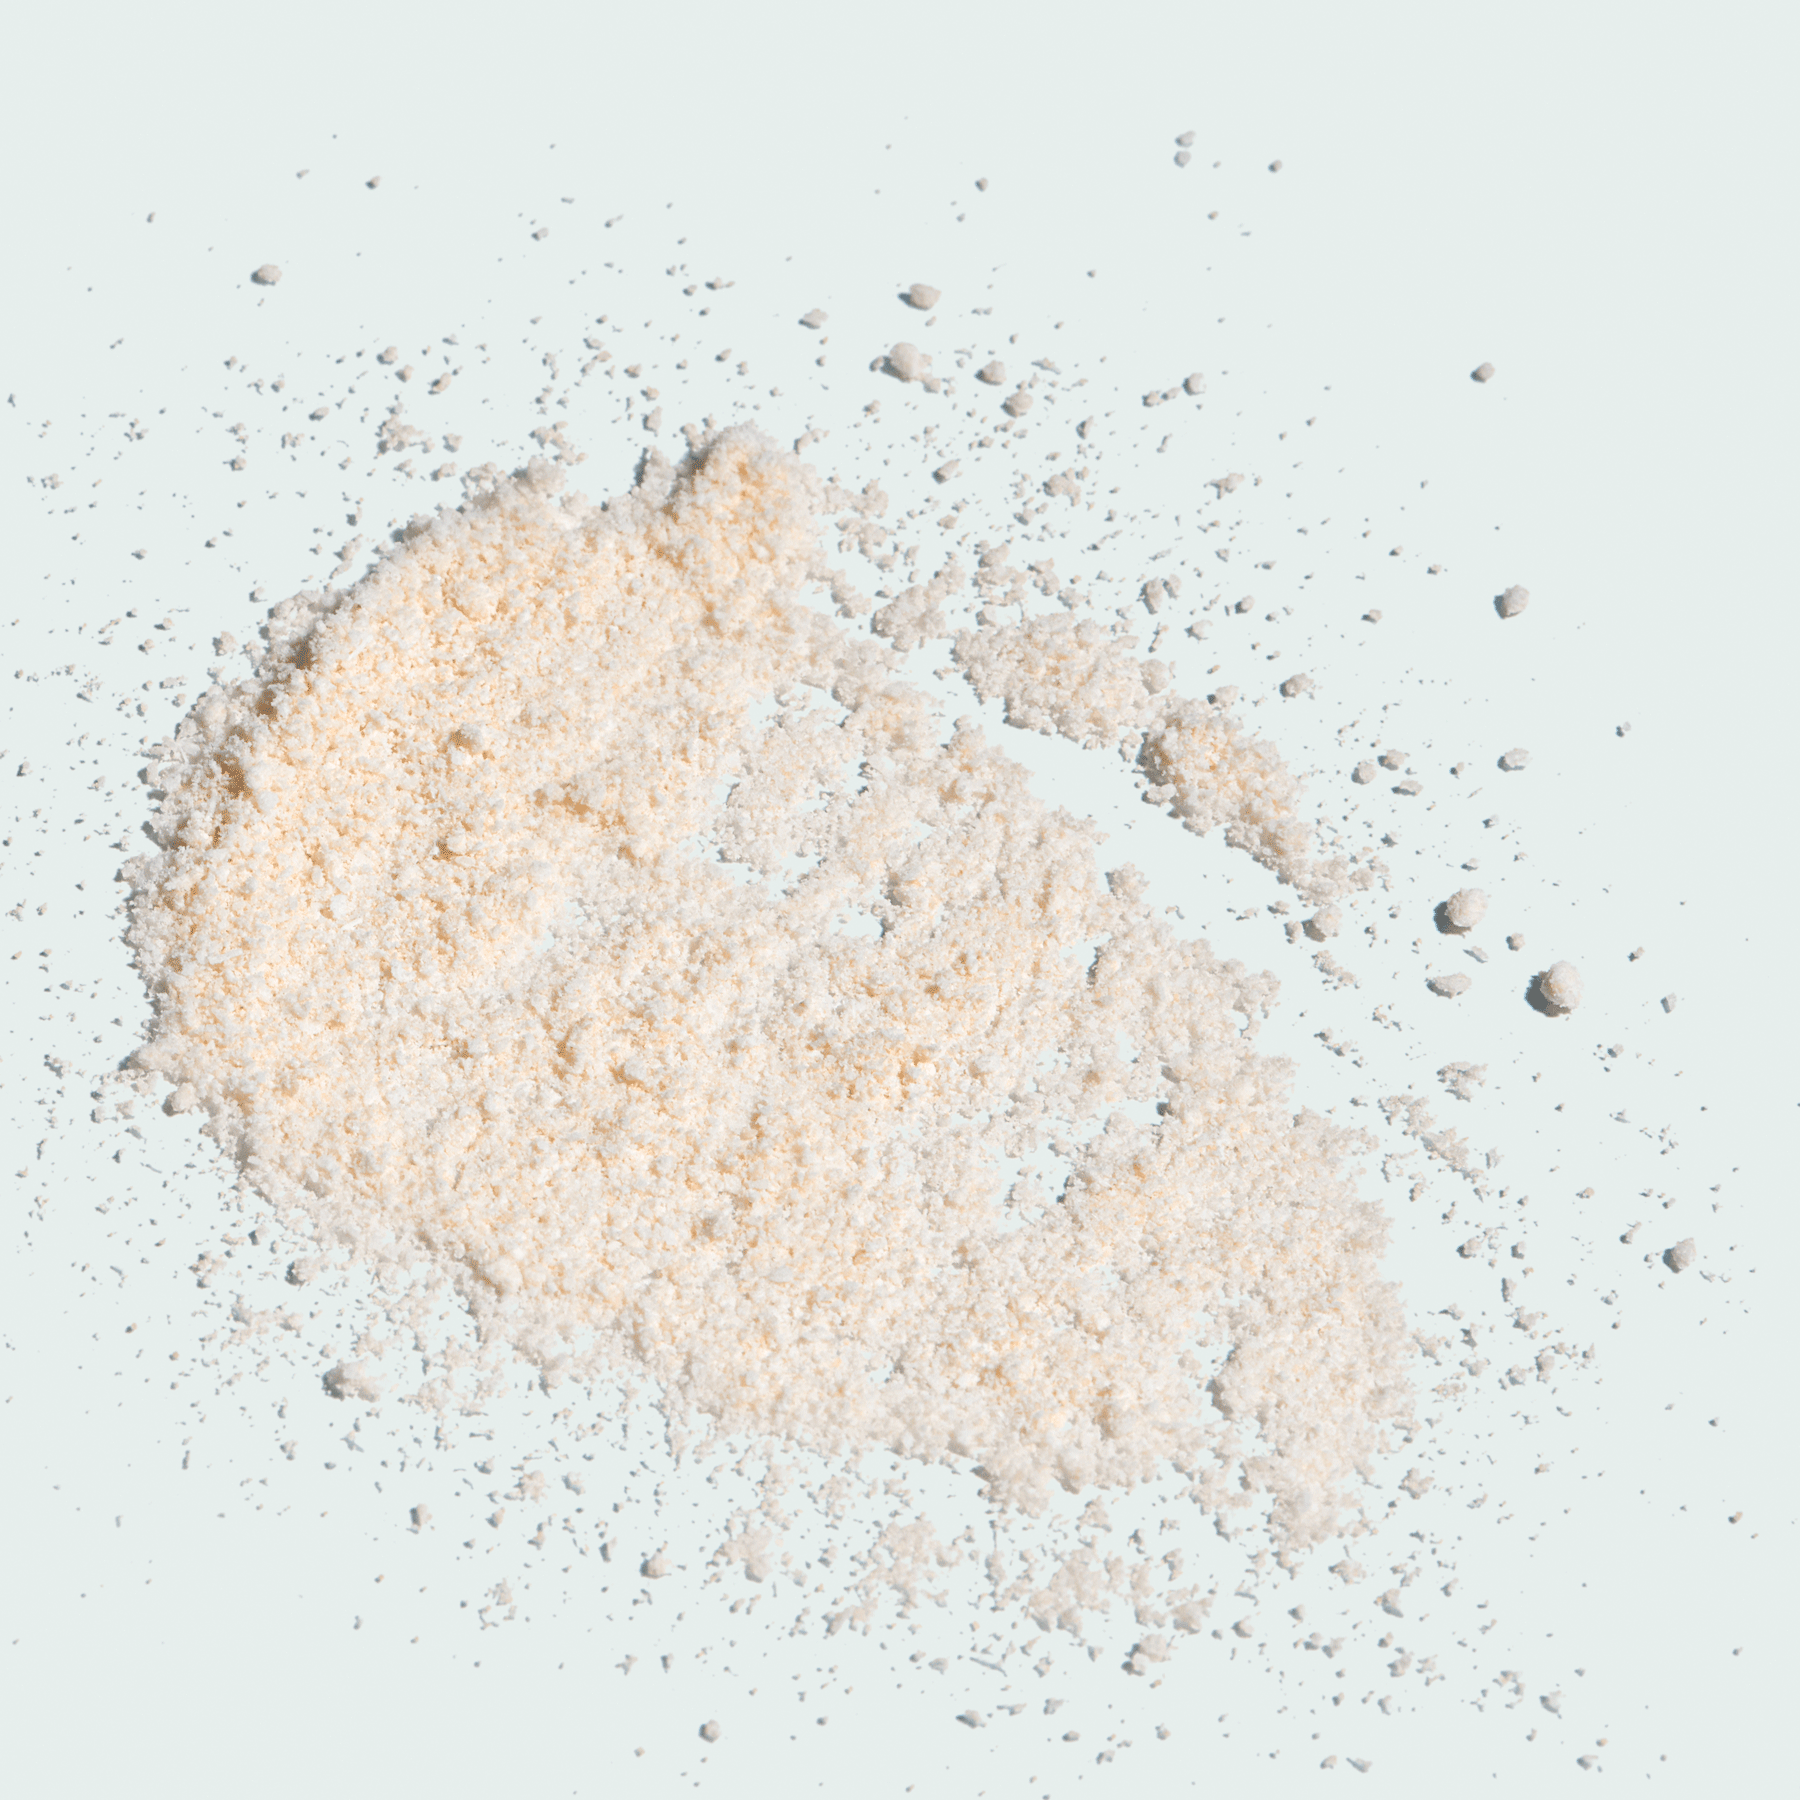 ILUMA® intense brightening exfoliating powder